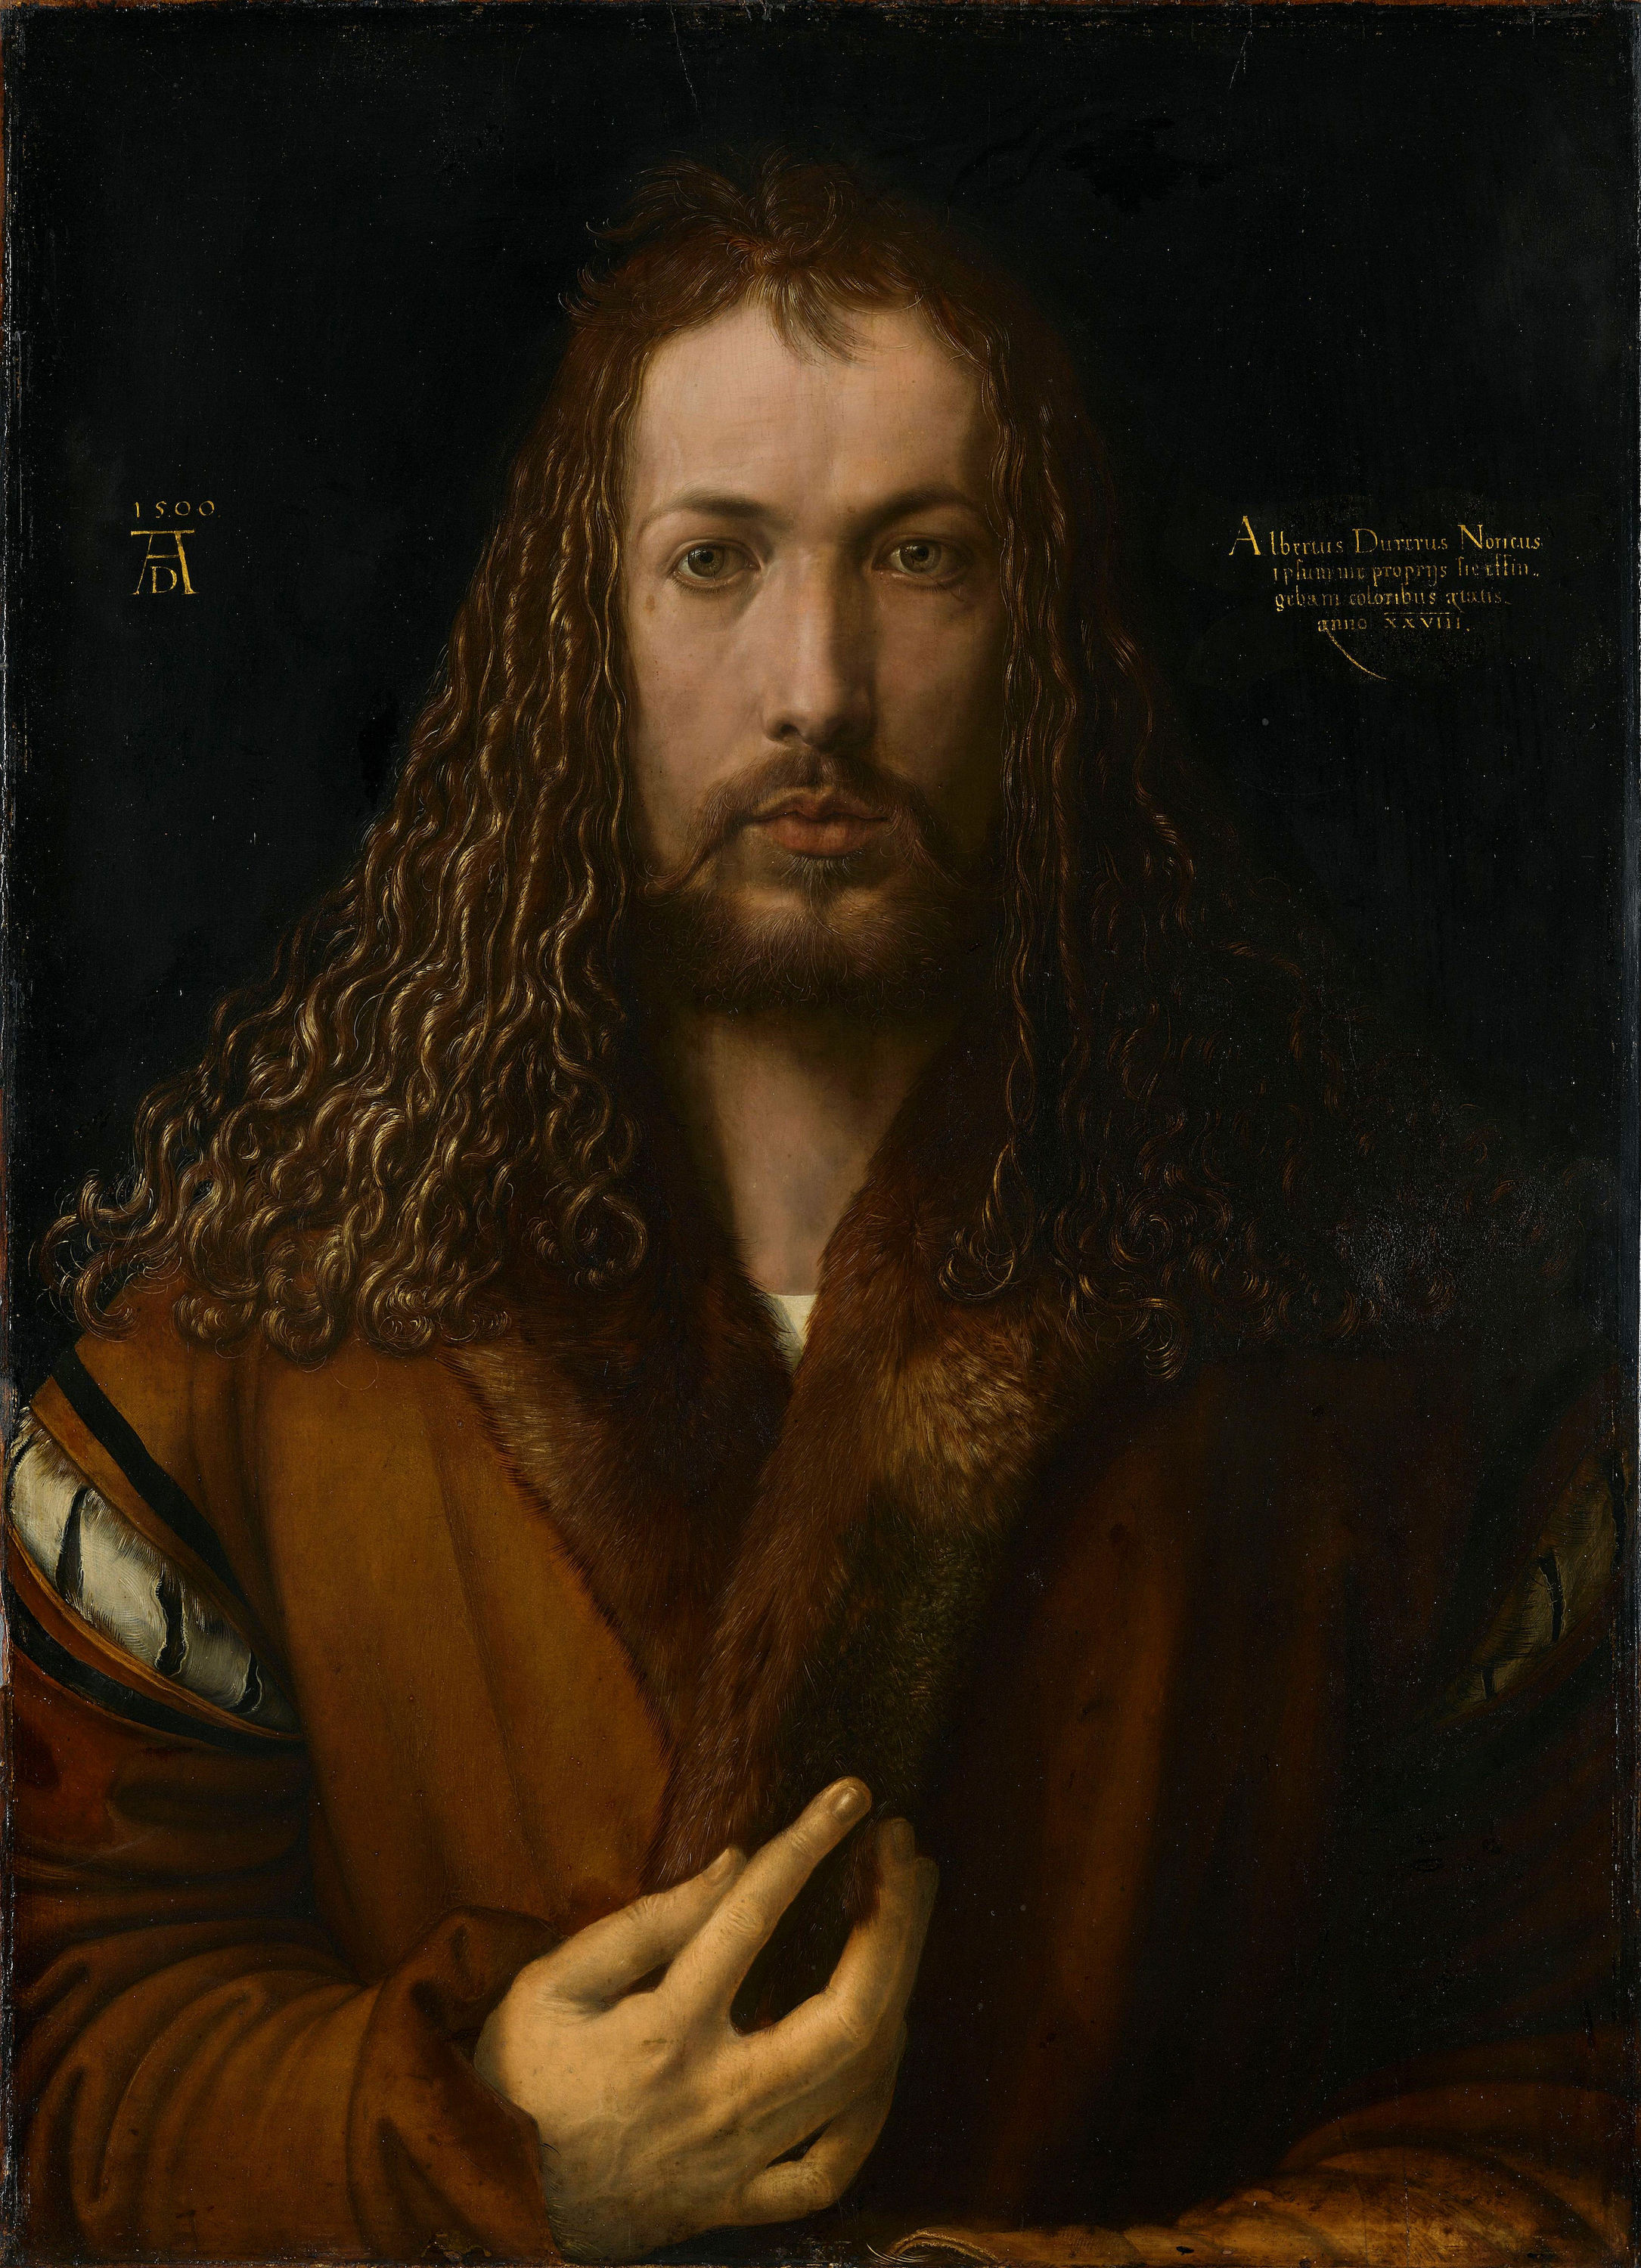 Autoritratto by Albrecht Dürer - 1500 - 67,1 x 48,9 cm Alte Pinakothek